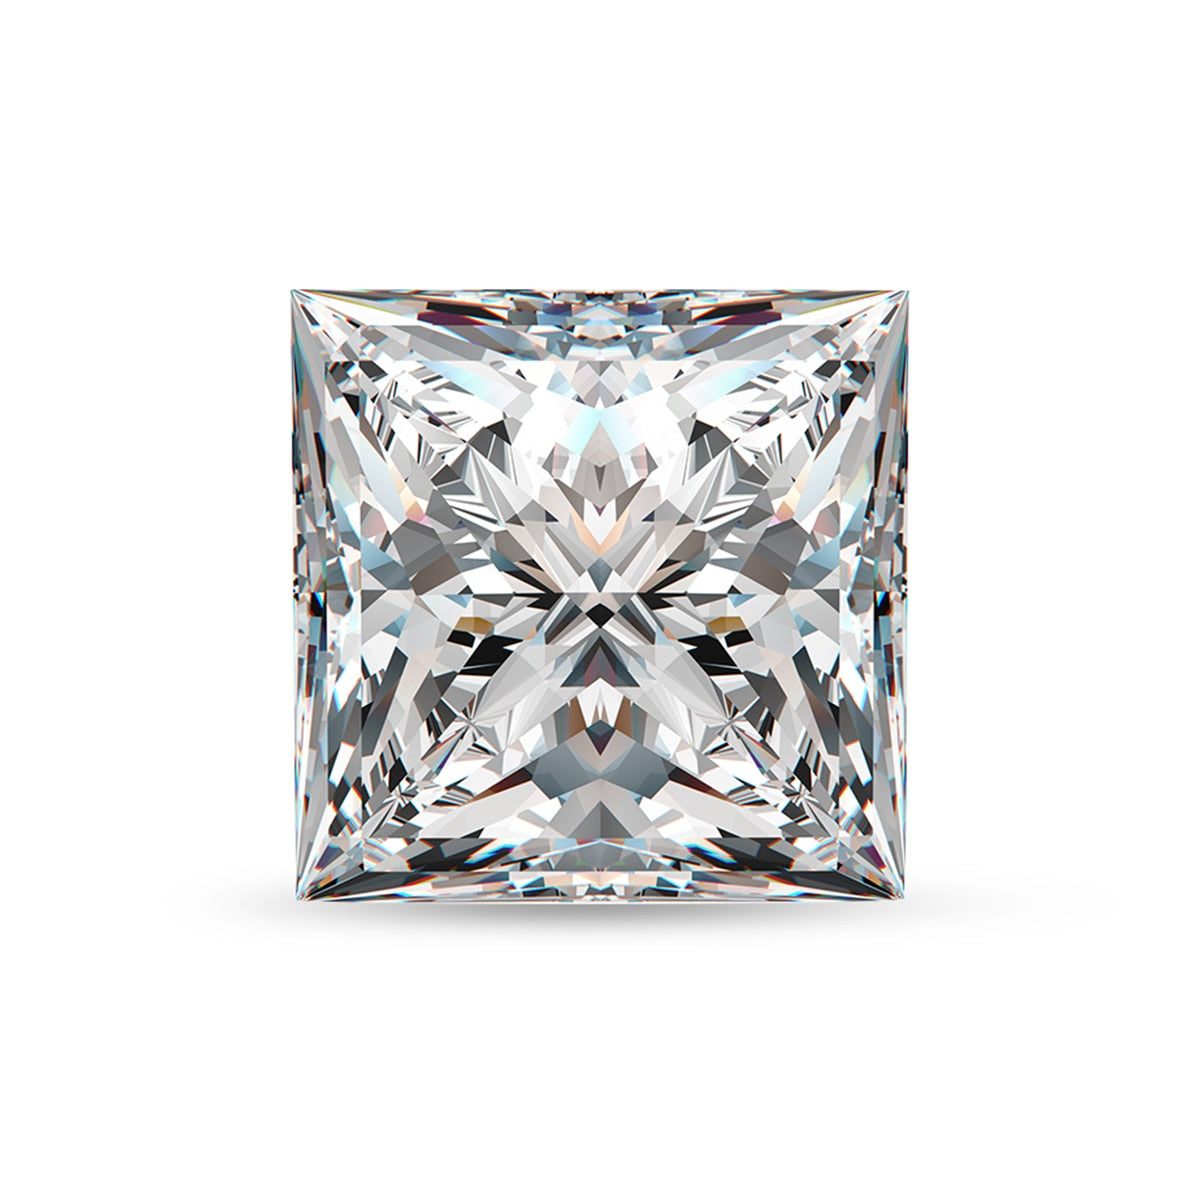 Princess Cut. Moissanite Gemstones. 0.35 to 6.0 Carat. D VVS1.